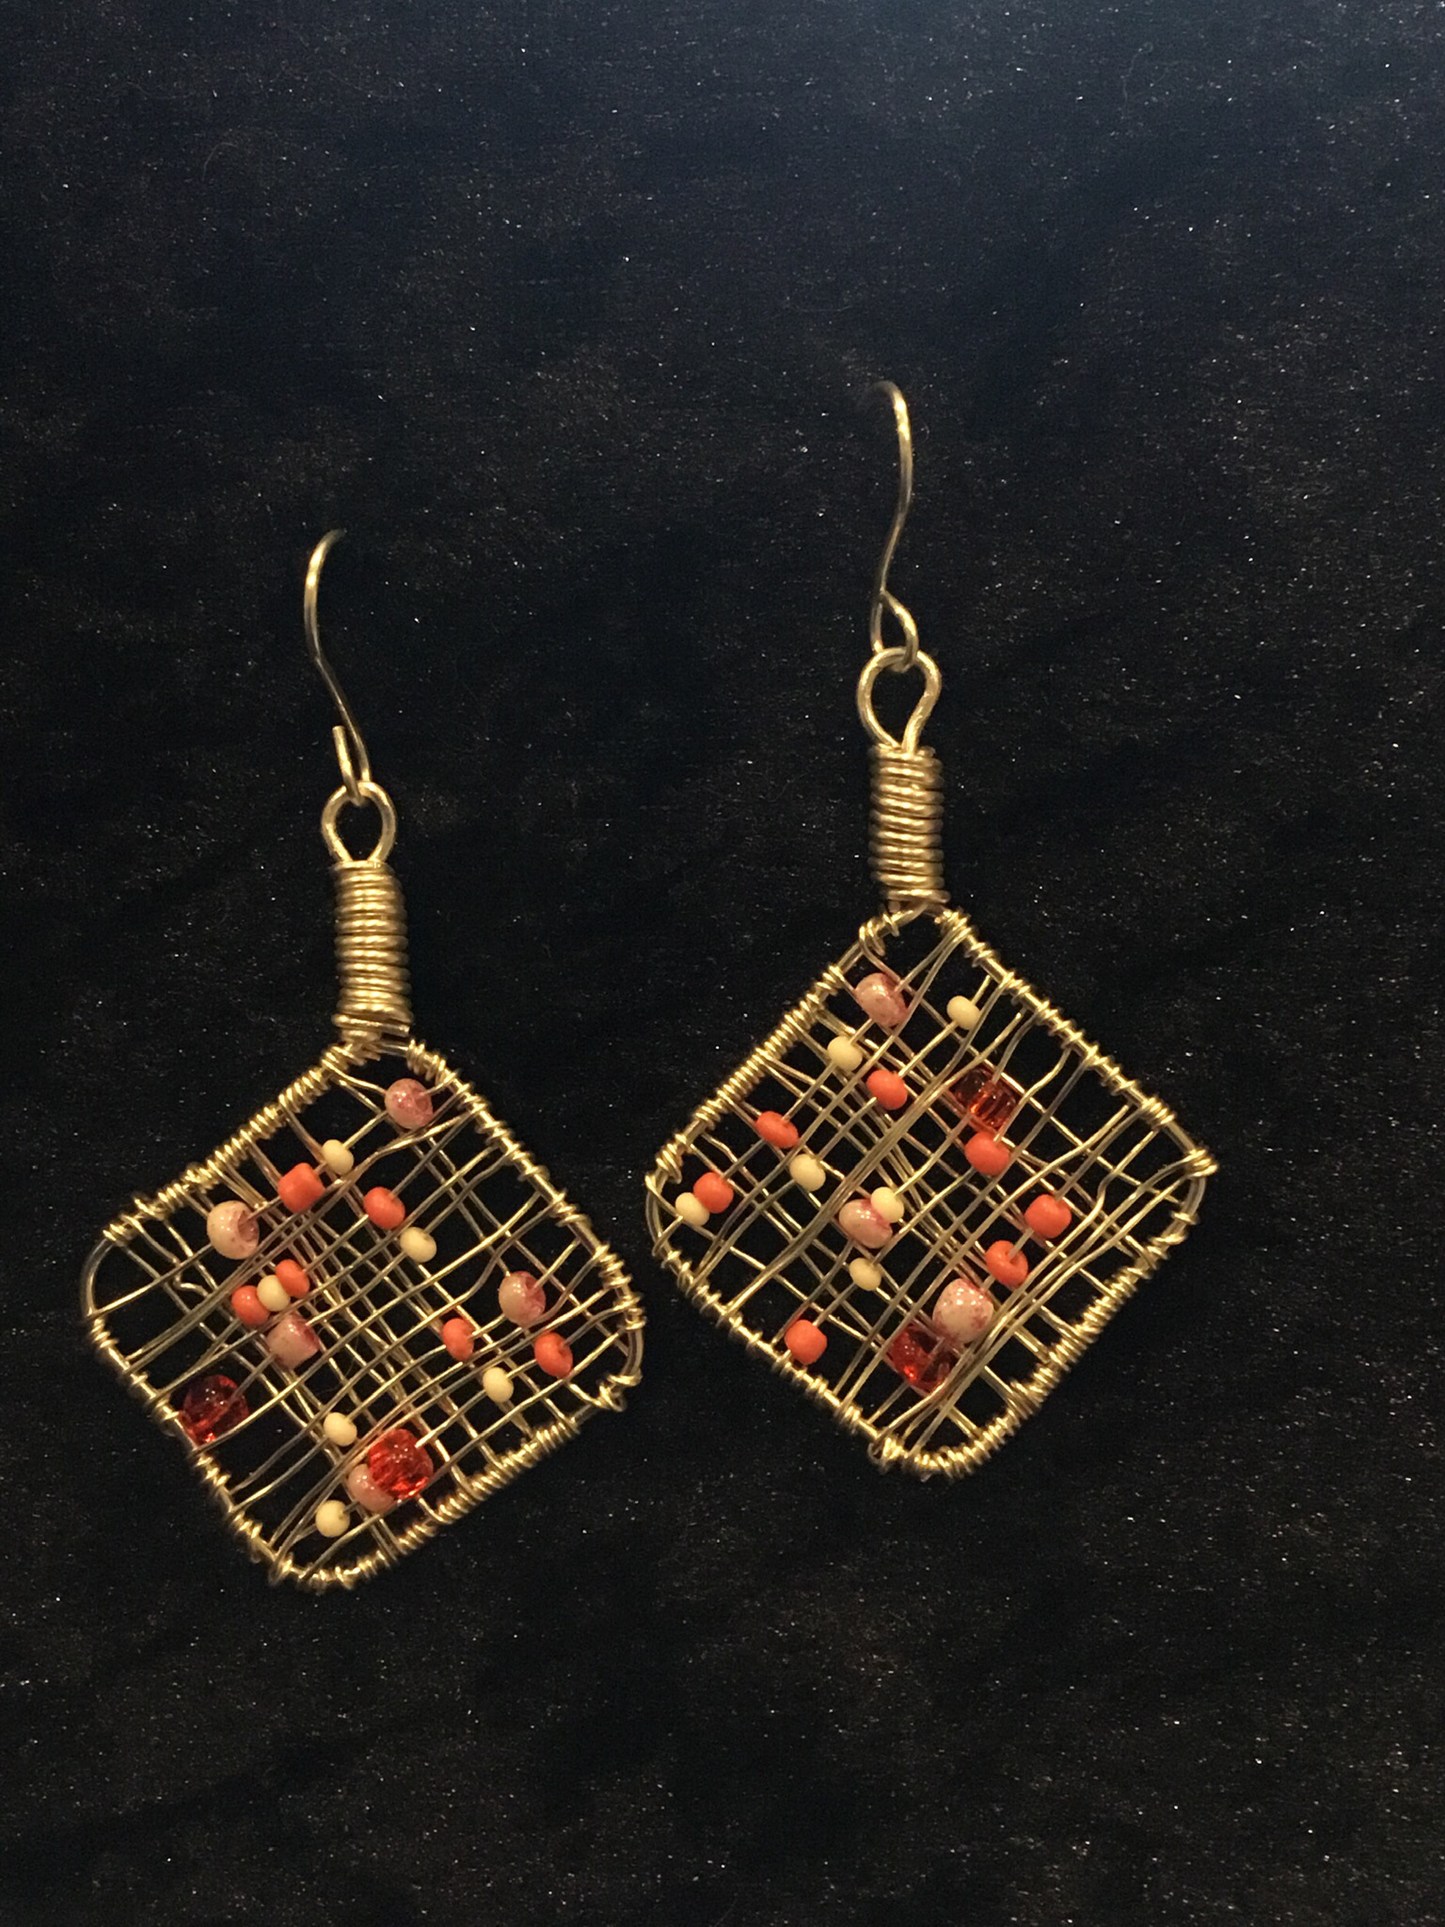 Wire & pink seed beads earrings in a rhombus